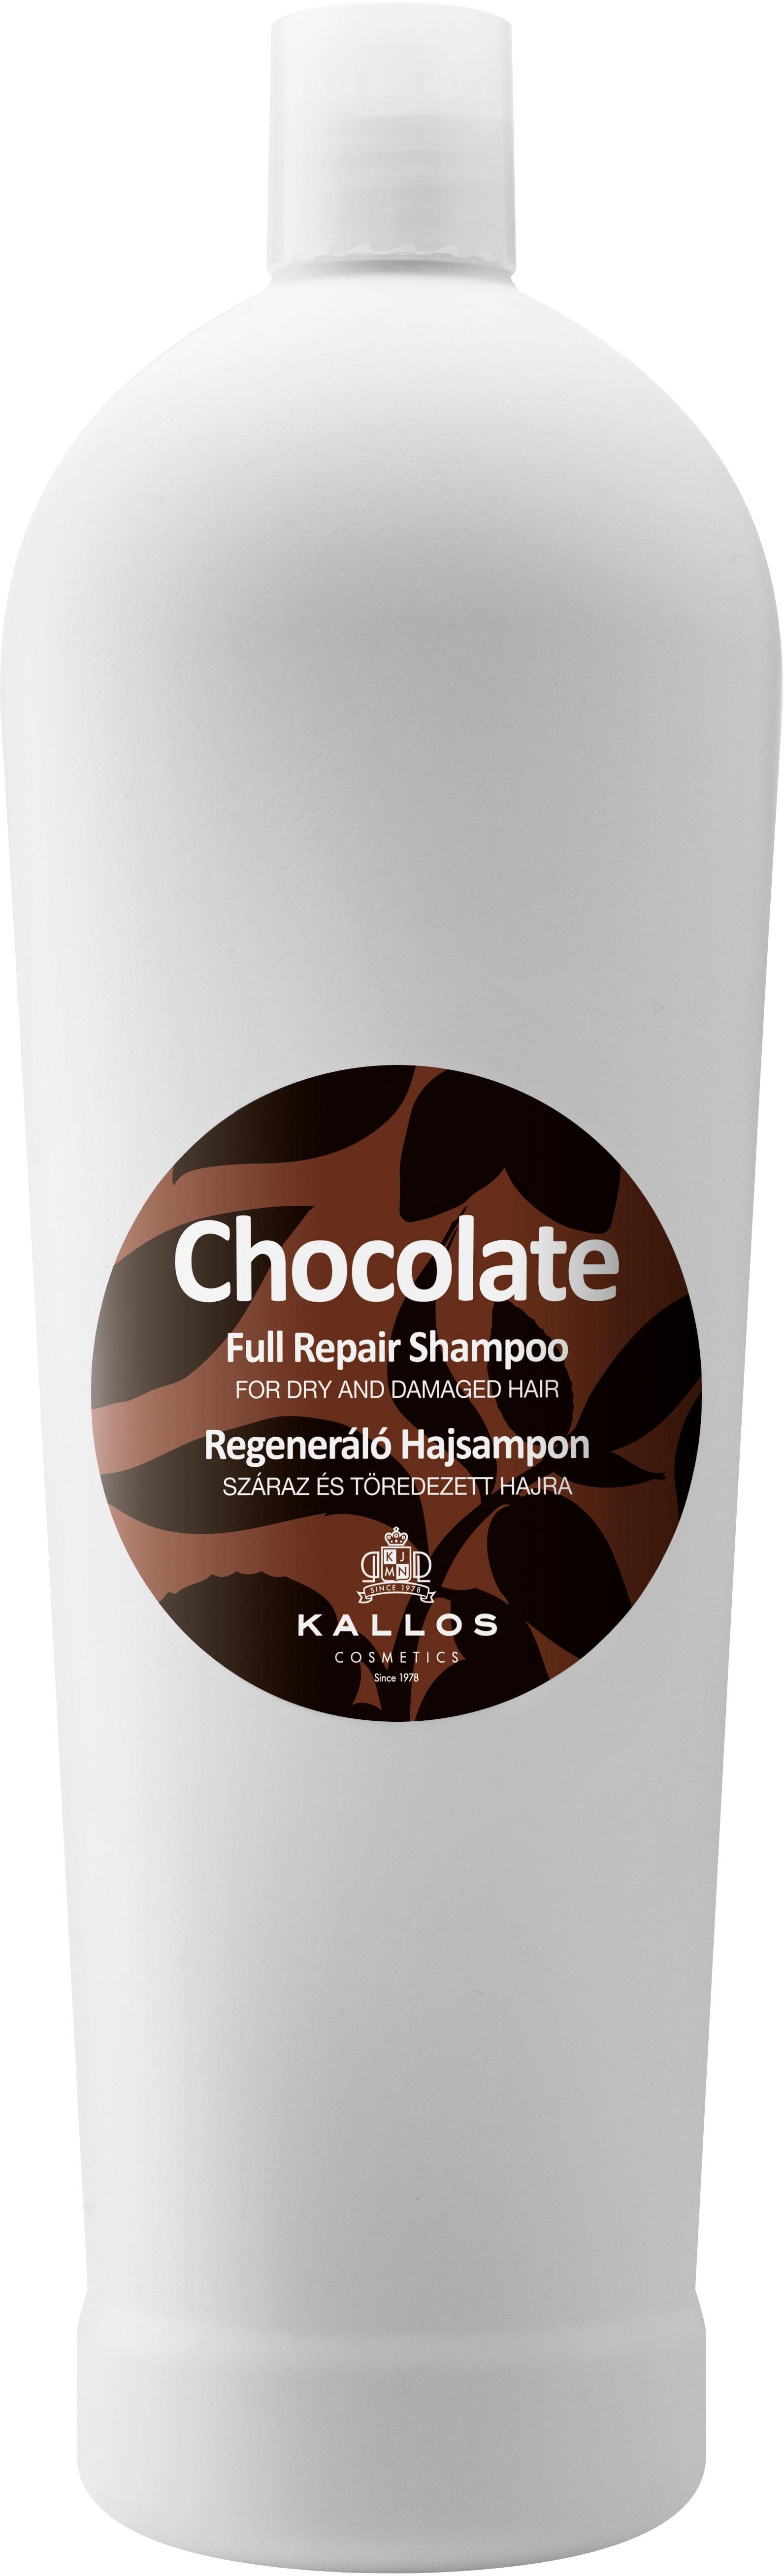 Шампунь для сухого та пошкодженого волосся Kallos Cosmetics Chocolate Full Repair Shampoo Шоколад 1000 мл